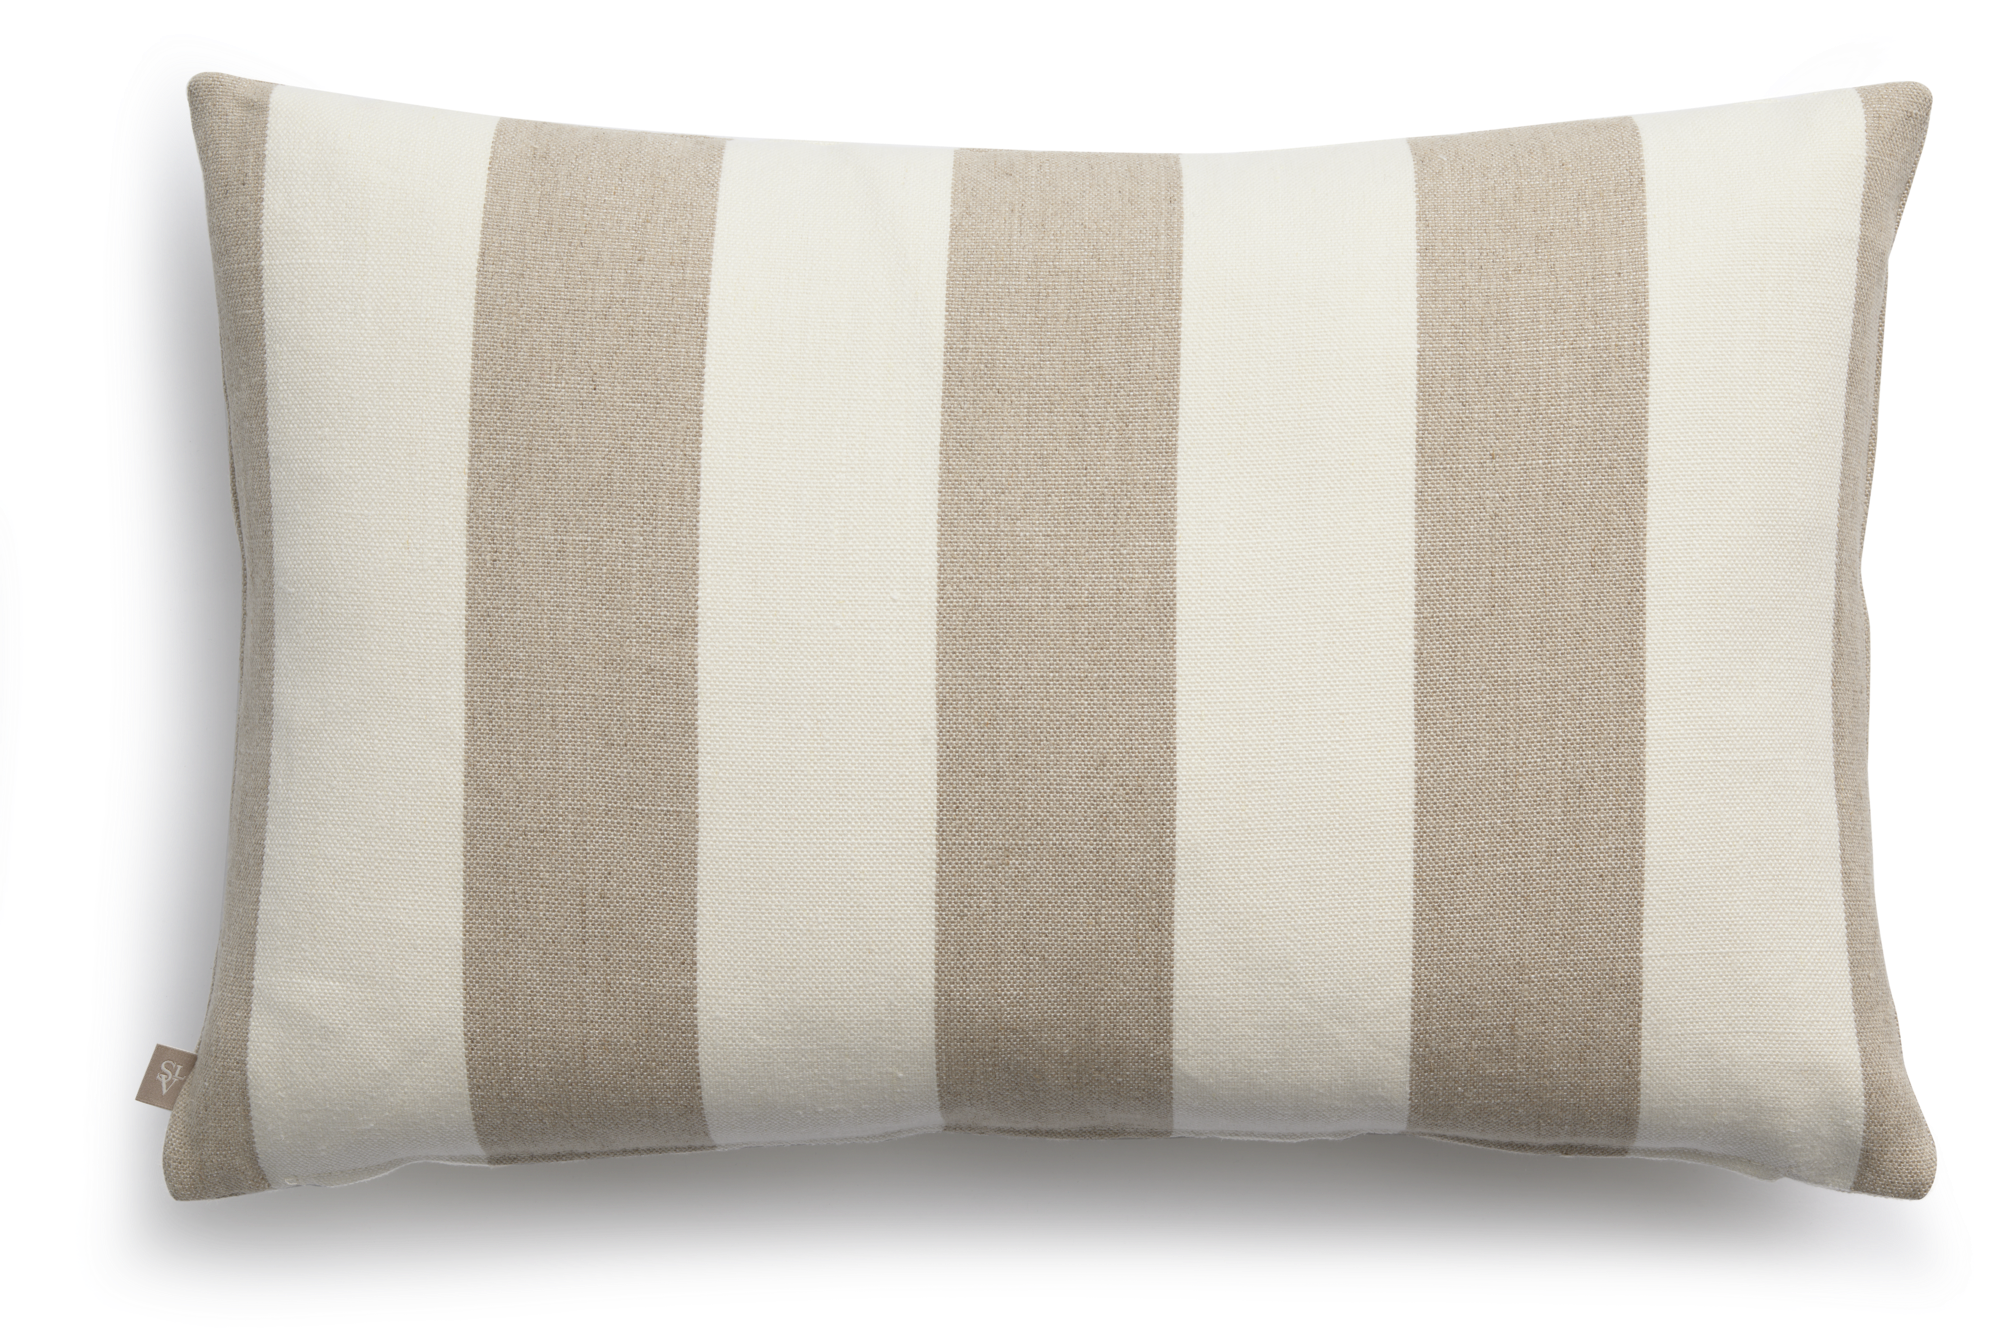 Cabos decorative pillow